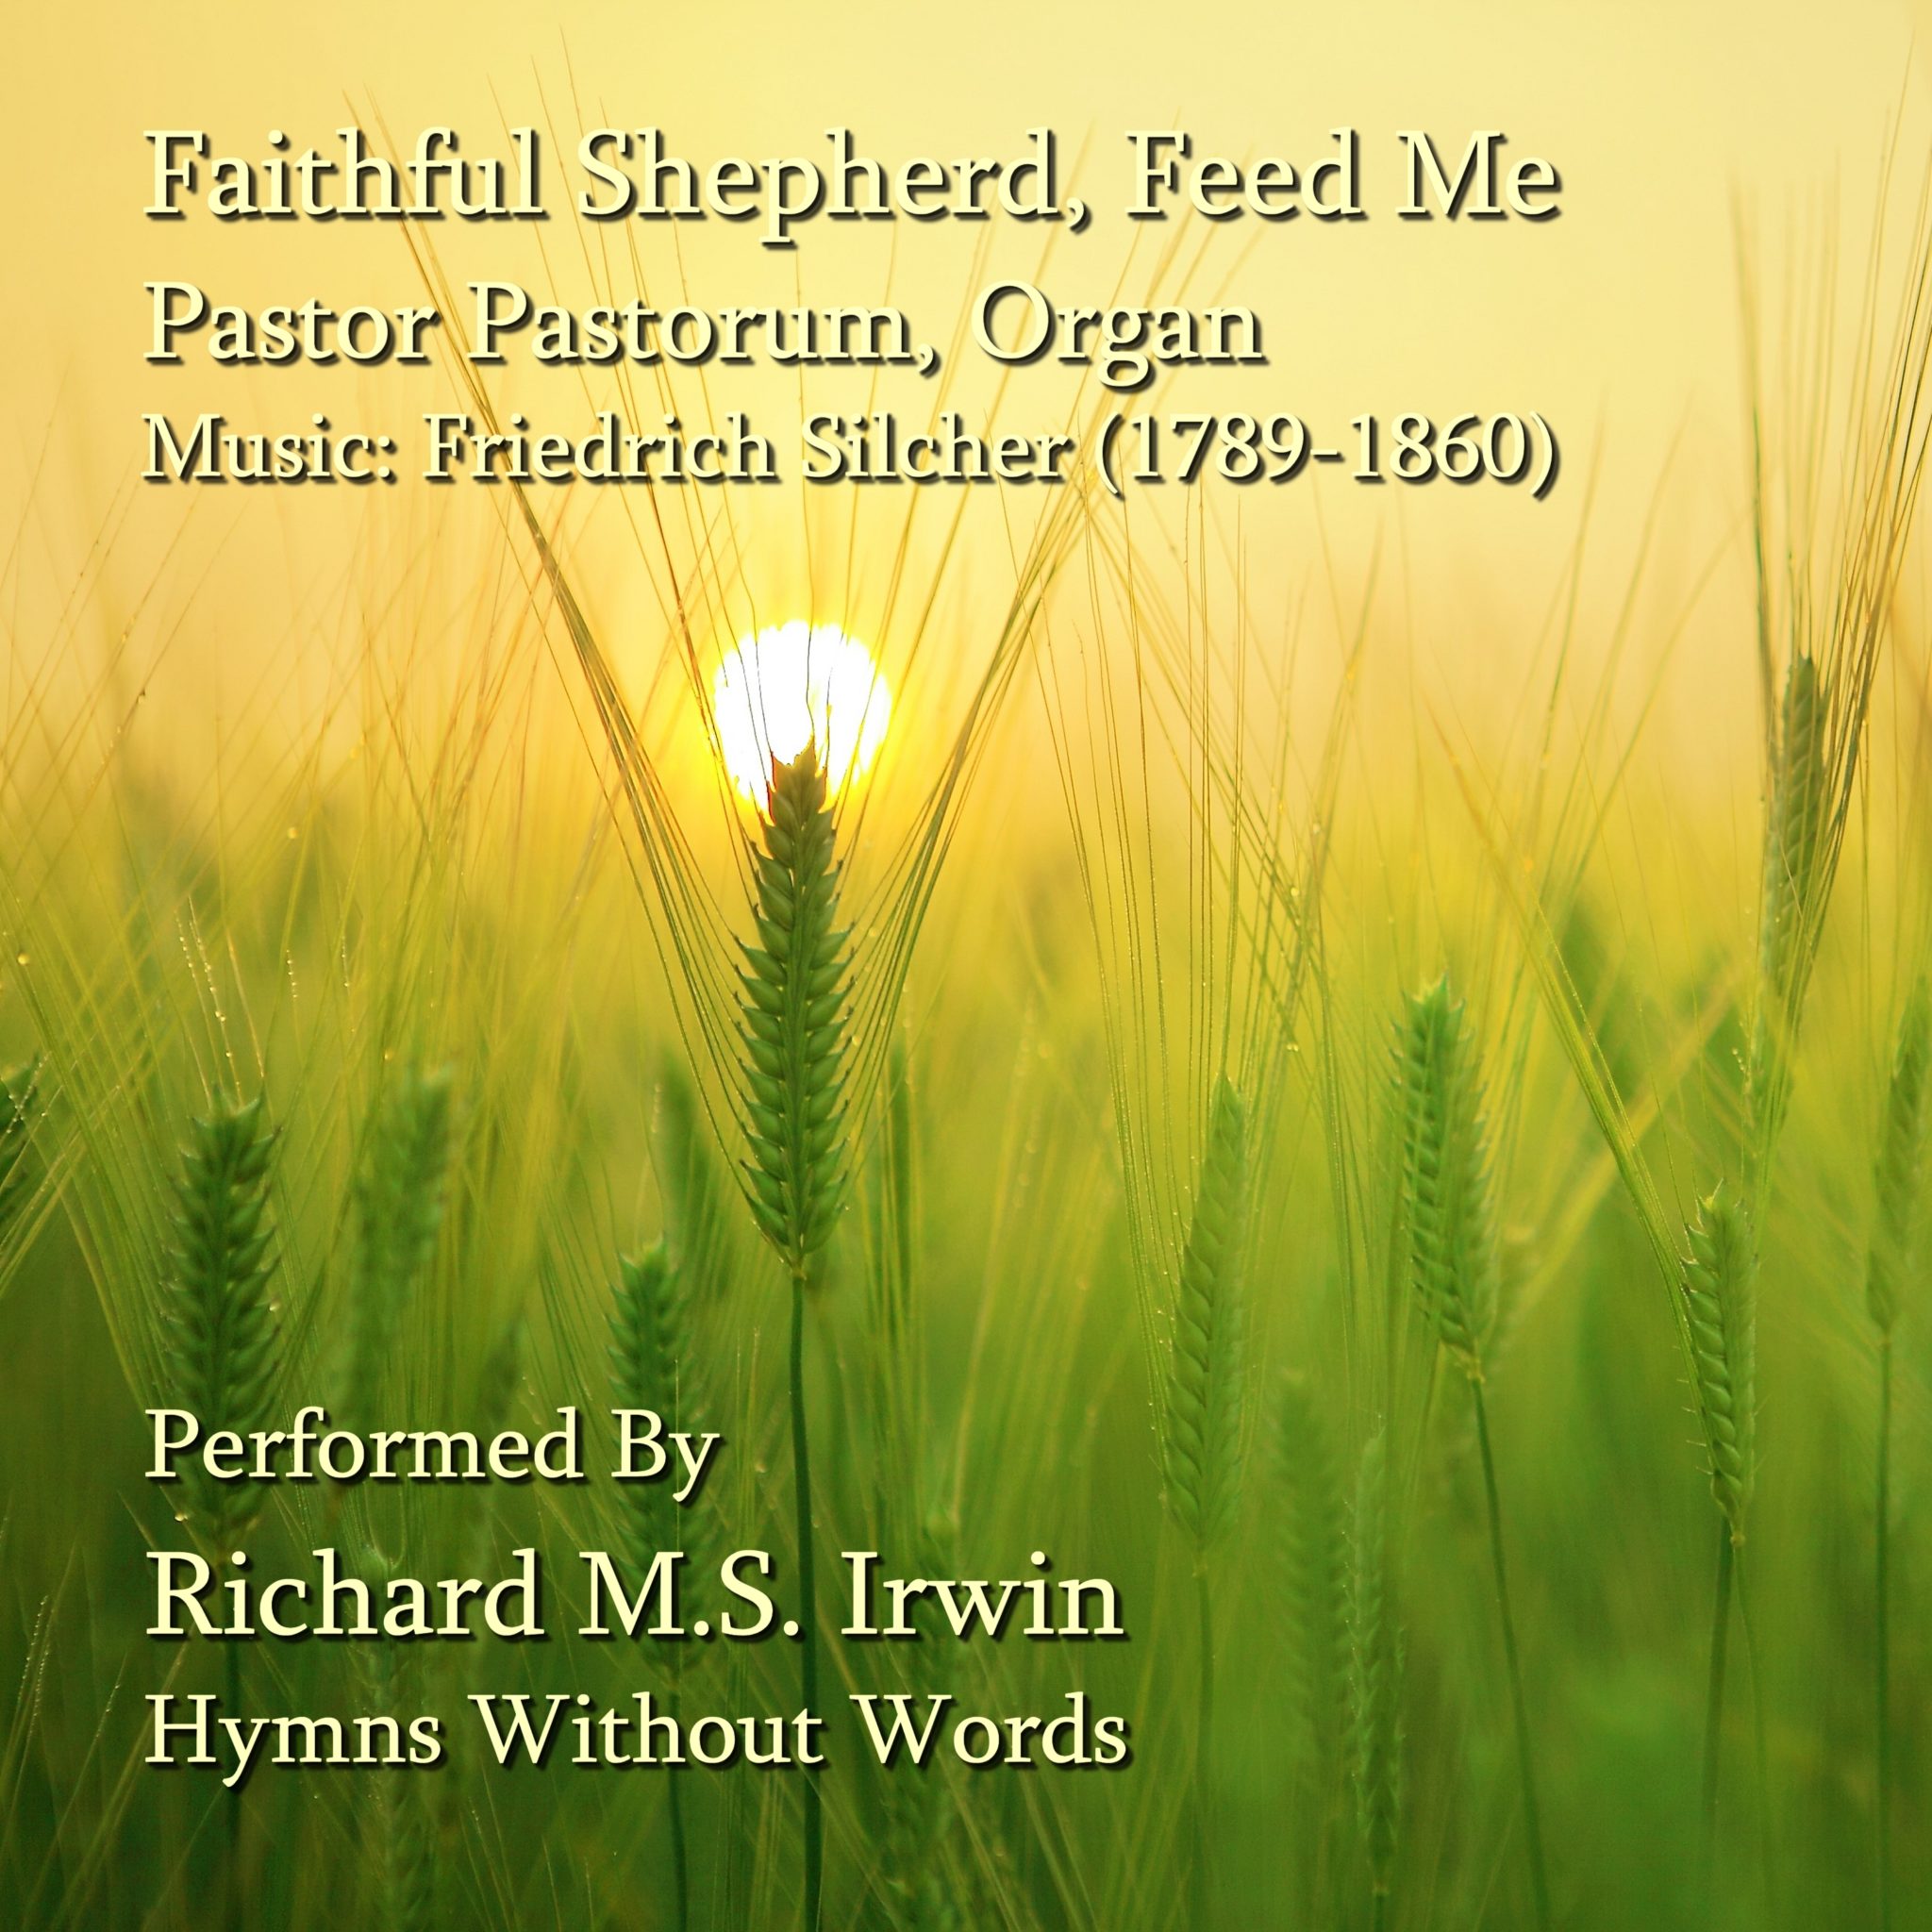 Faithful Shepherd Feed Me (Pastor Pastorum 5 Verses) Organ